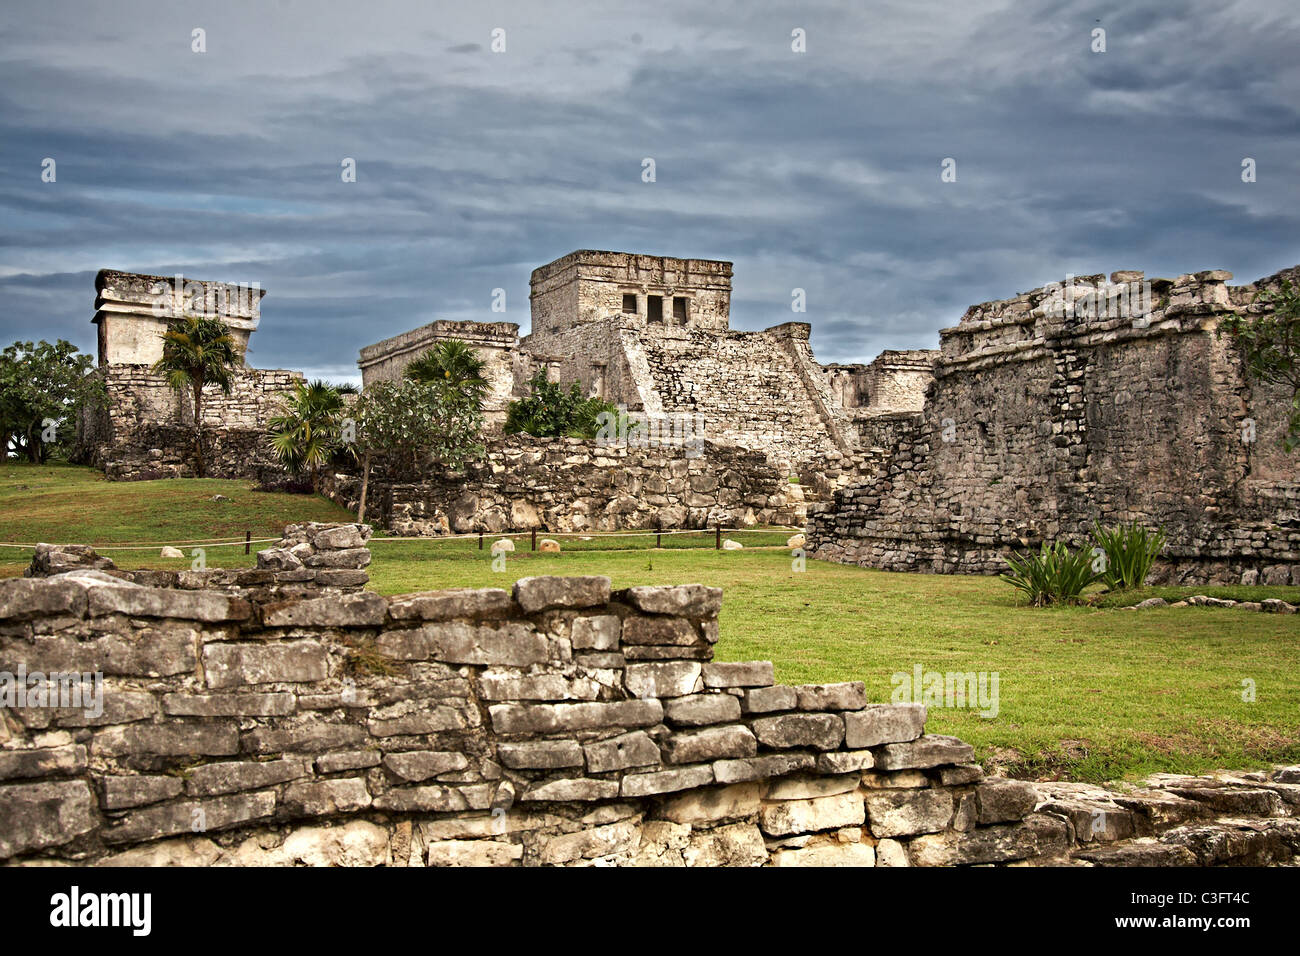 Ruines Maya El Castillo et le Temple de la Dieu descendant à Tulum, Mexique Banque D'Images